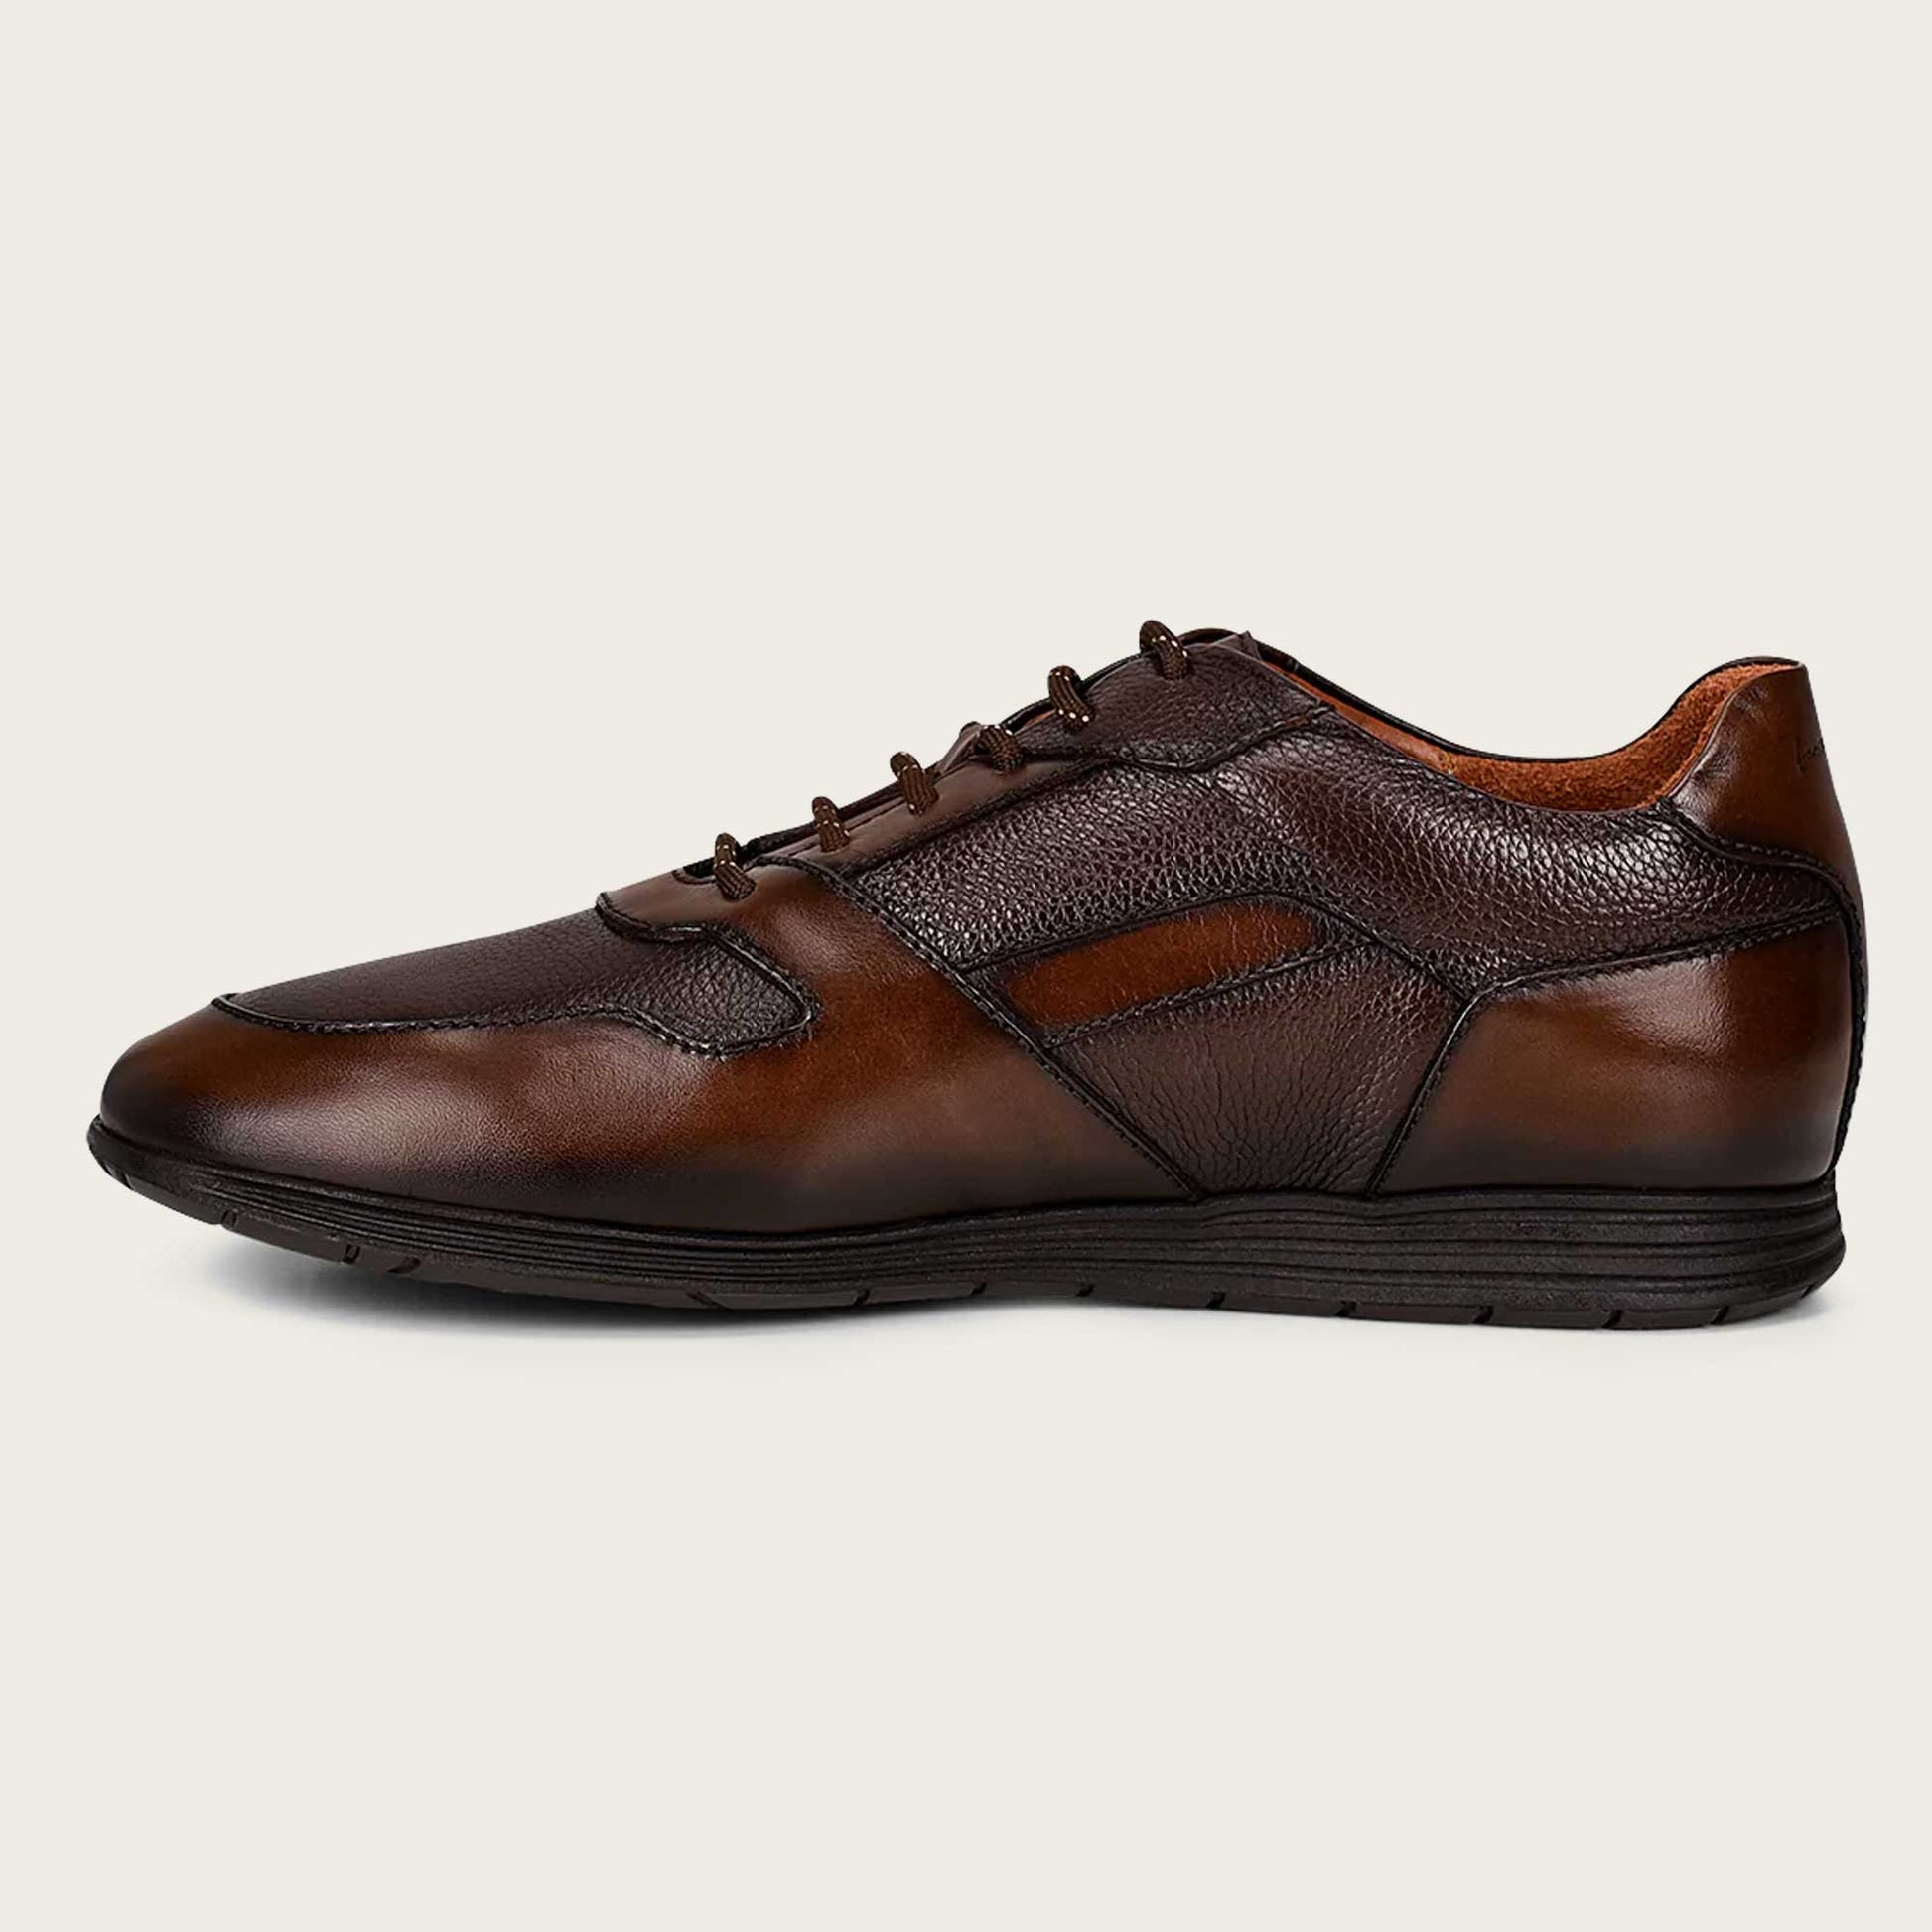 Brown bristol leather sneakers, Men's bovine leather sneakers